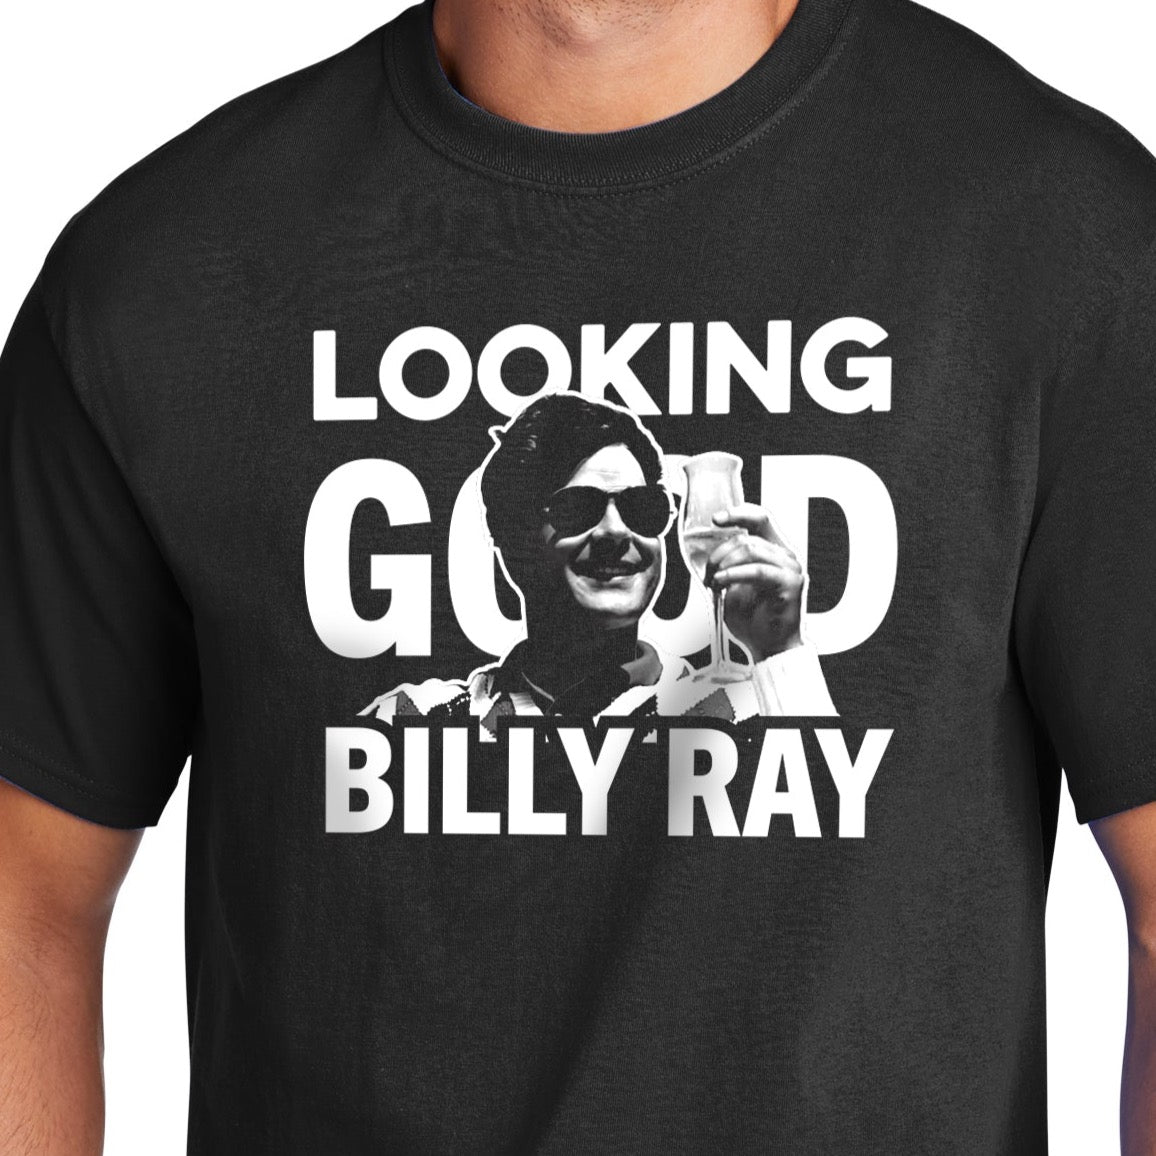 Looking Good Billy Ray Feeling Good Louis T-Shirt